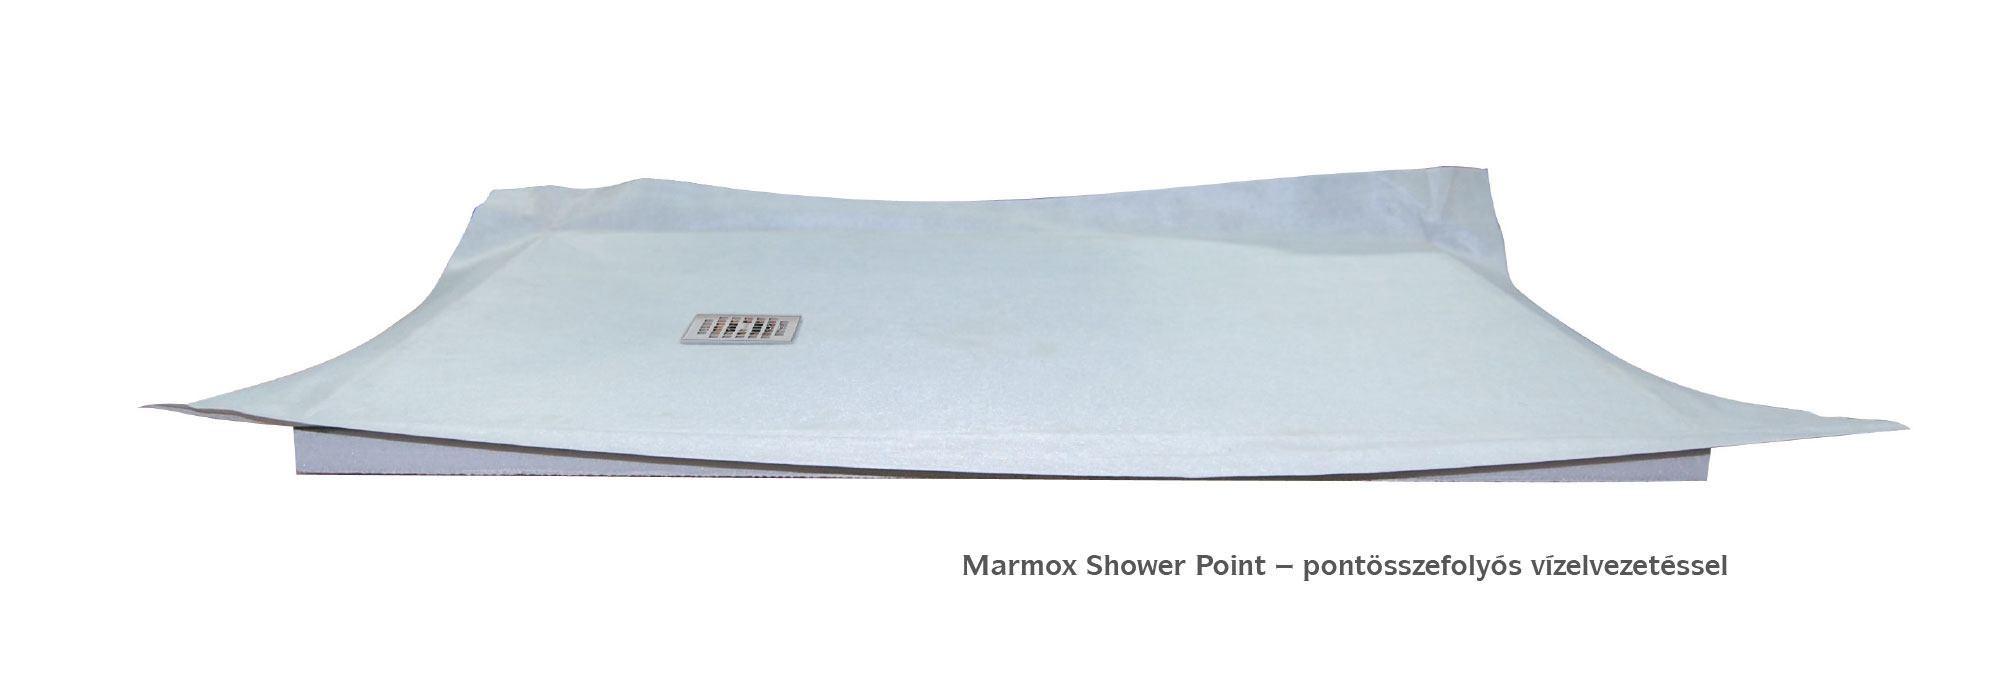 MARMOX Shower Slope - Punktablauf